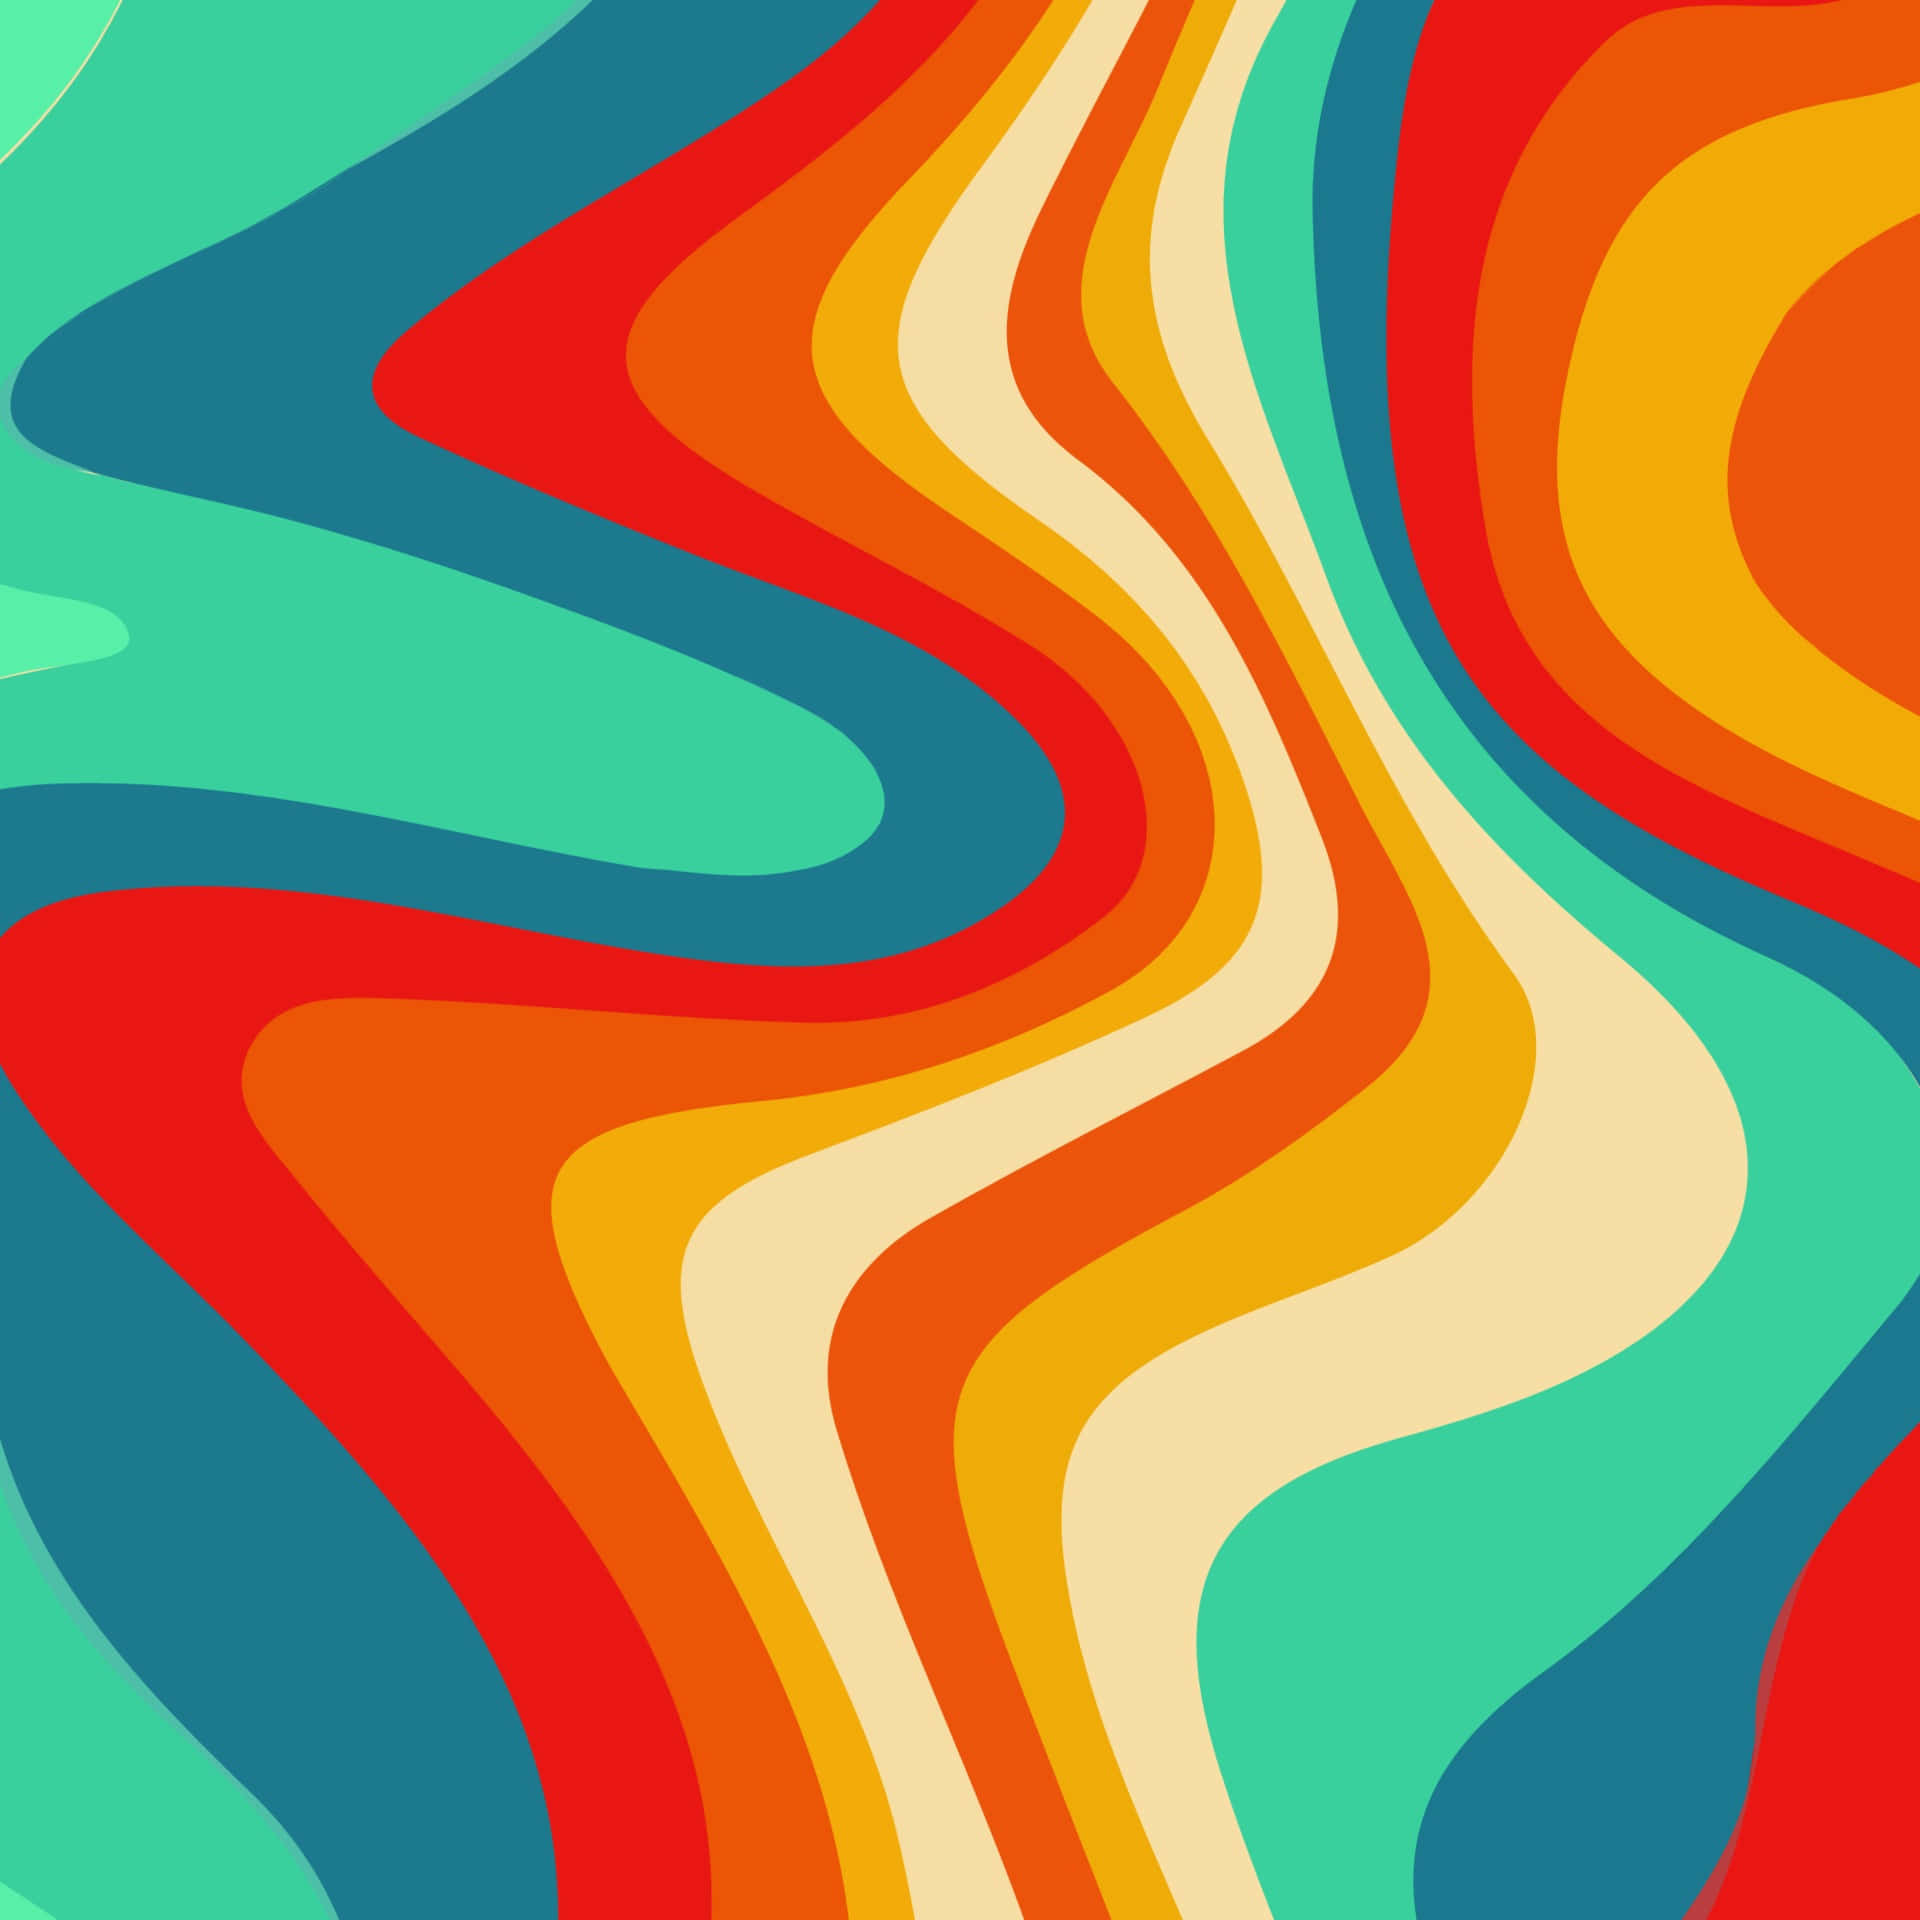 Retro Psychedelic Swirl Patterns Vector Illustration Background